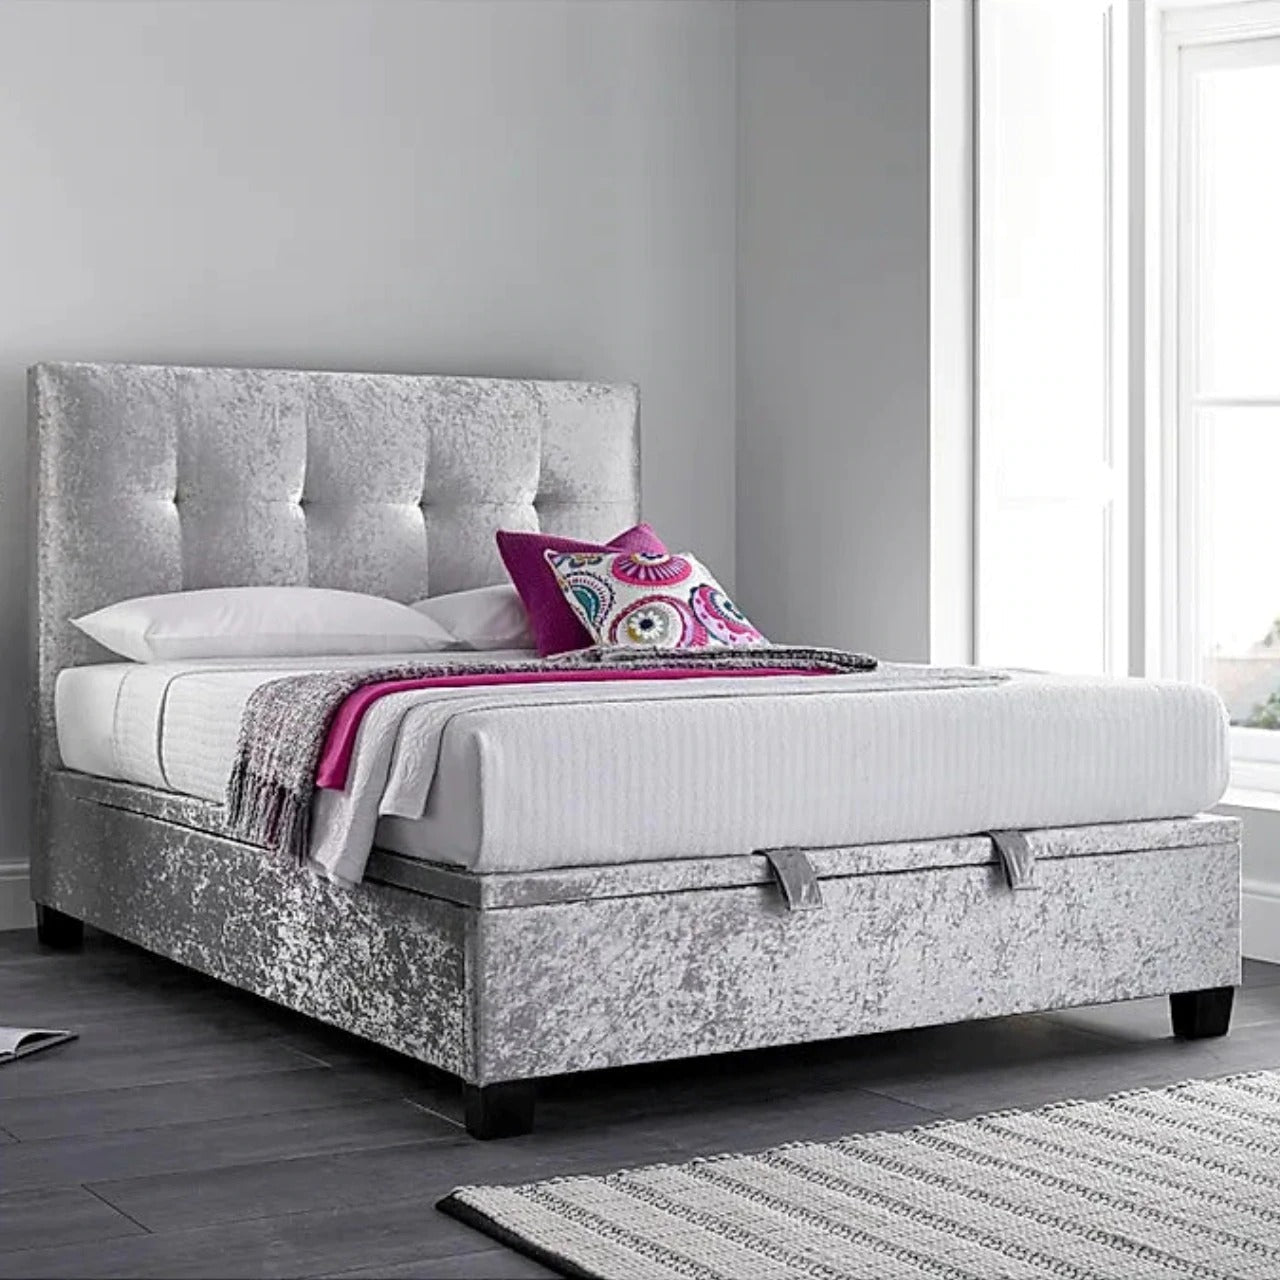 Buy Double Bed Design Online @Best Price in India! | GKW Retail